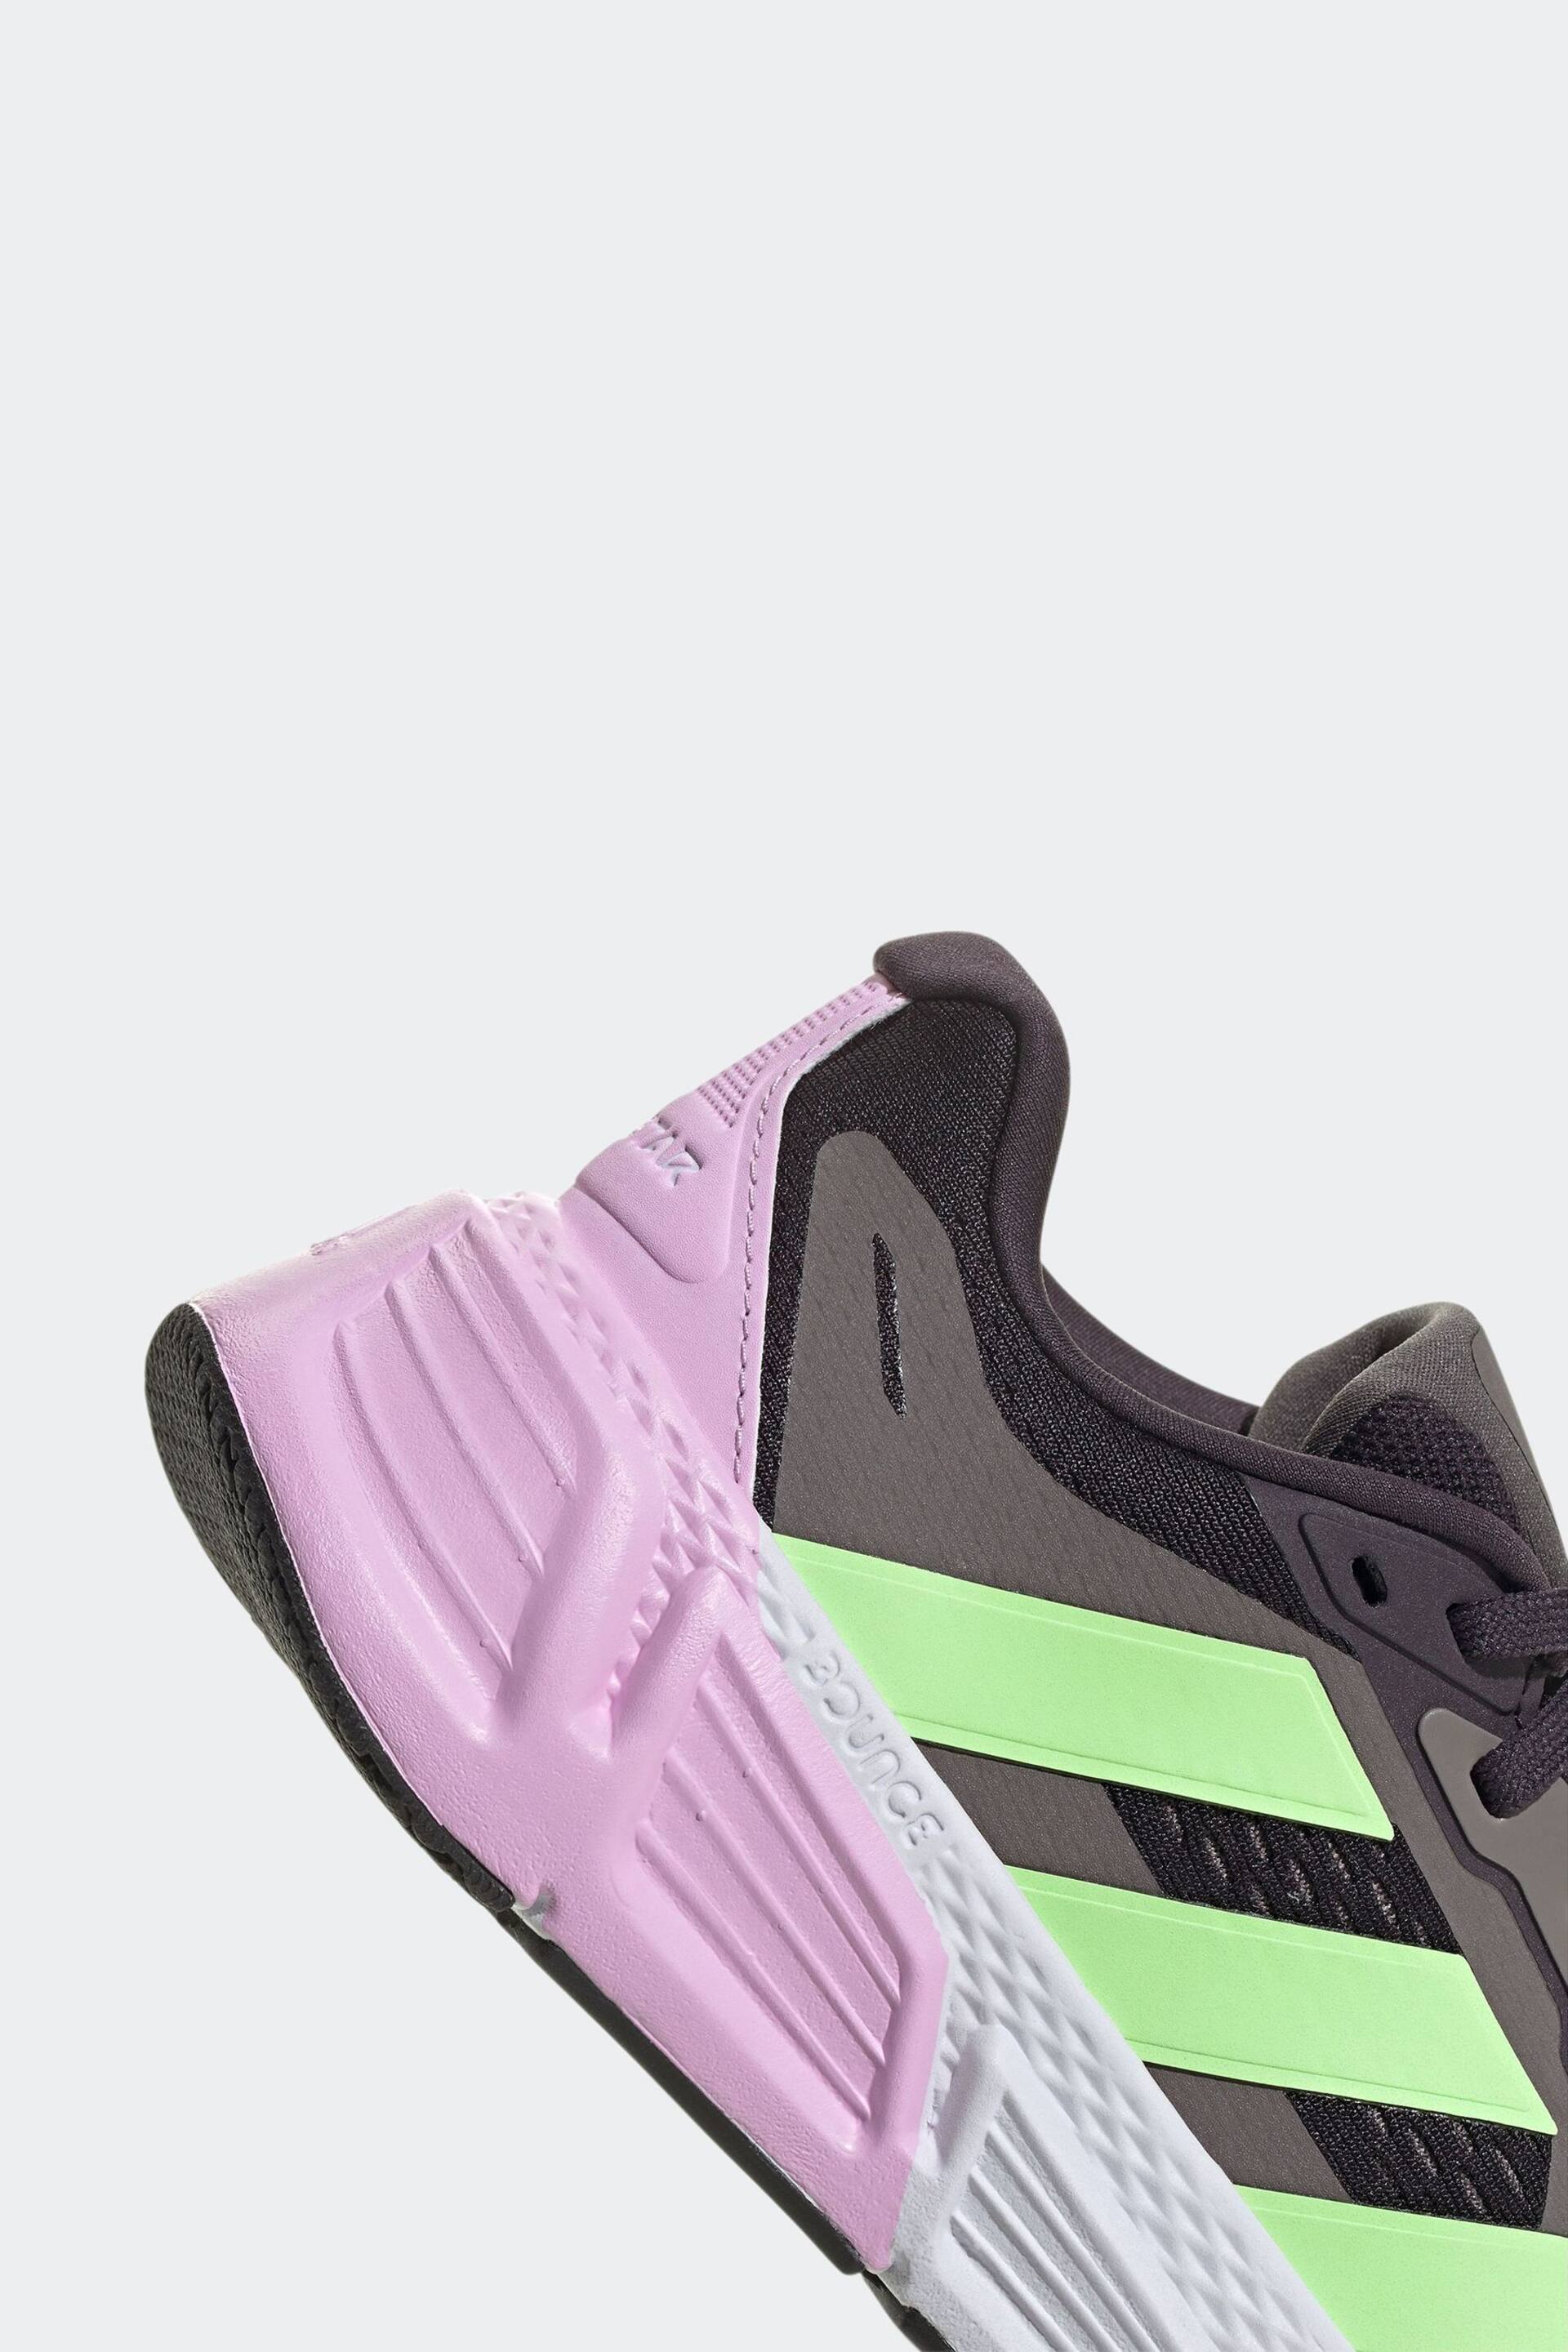 adidas Purple Questar Trainers - Image 7 of 8